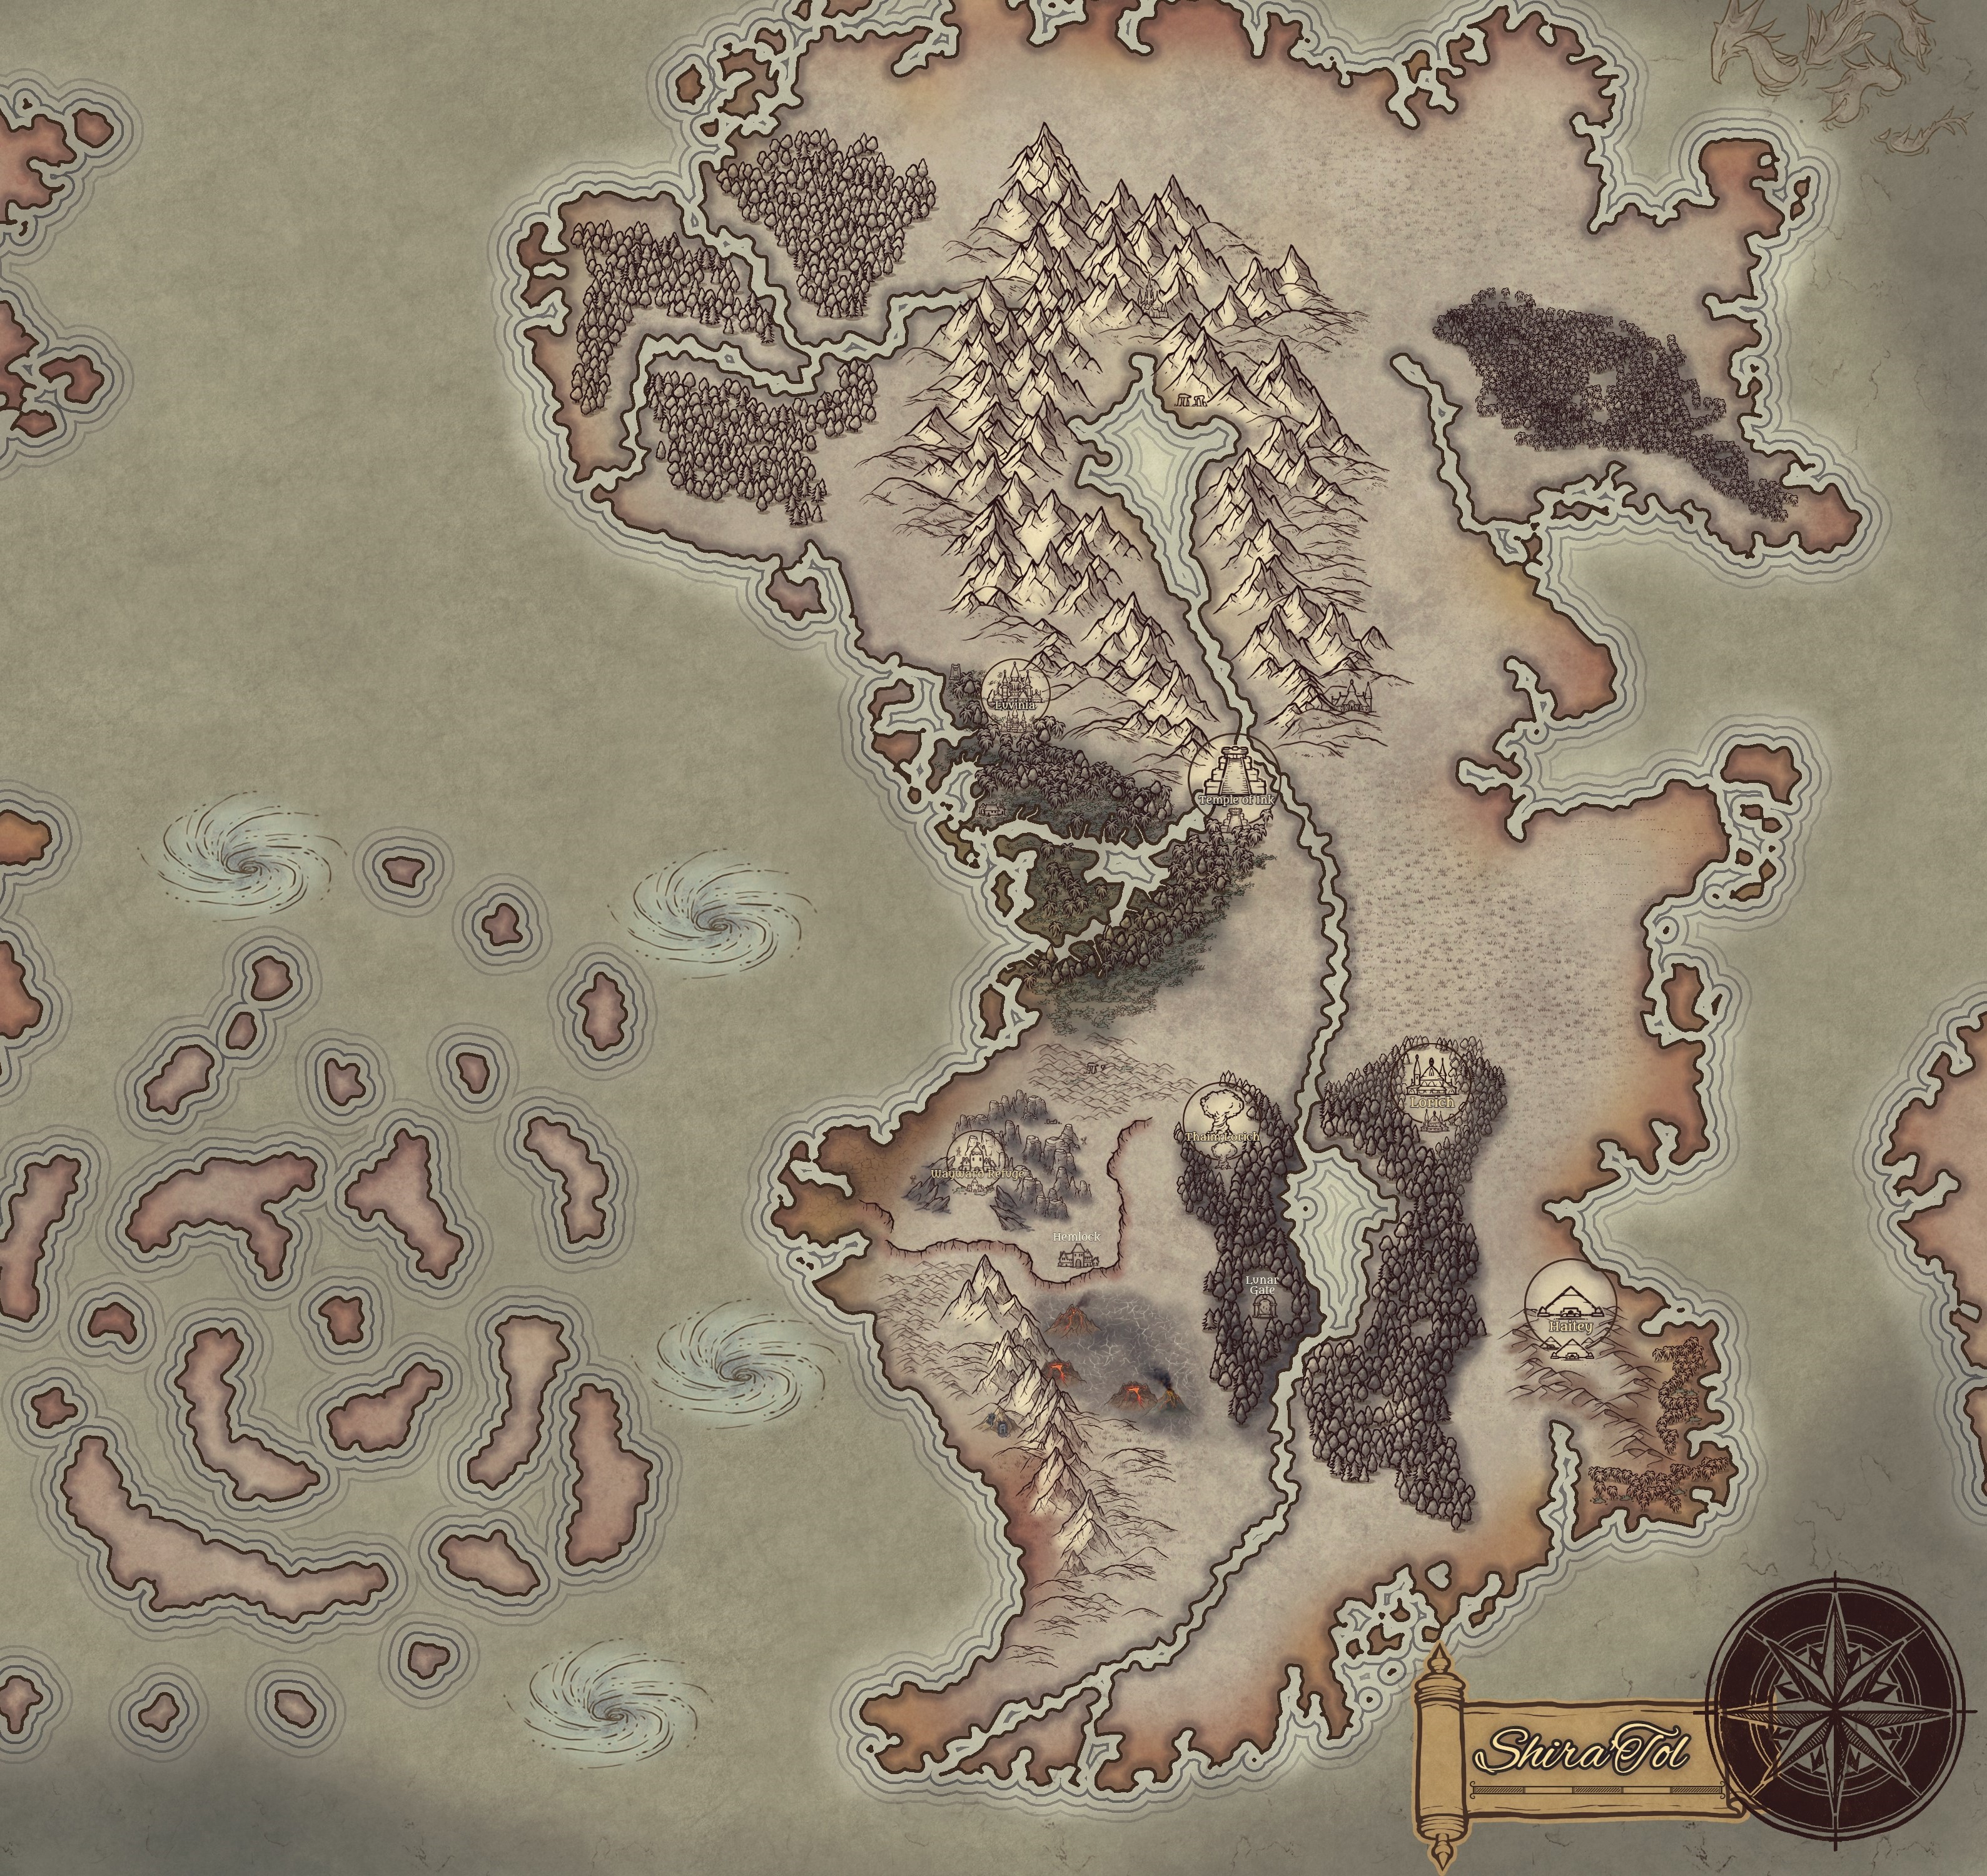 Shira'Tol World Map with Inkarnate